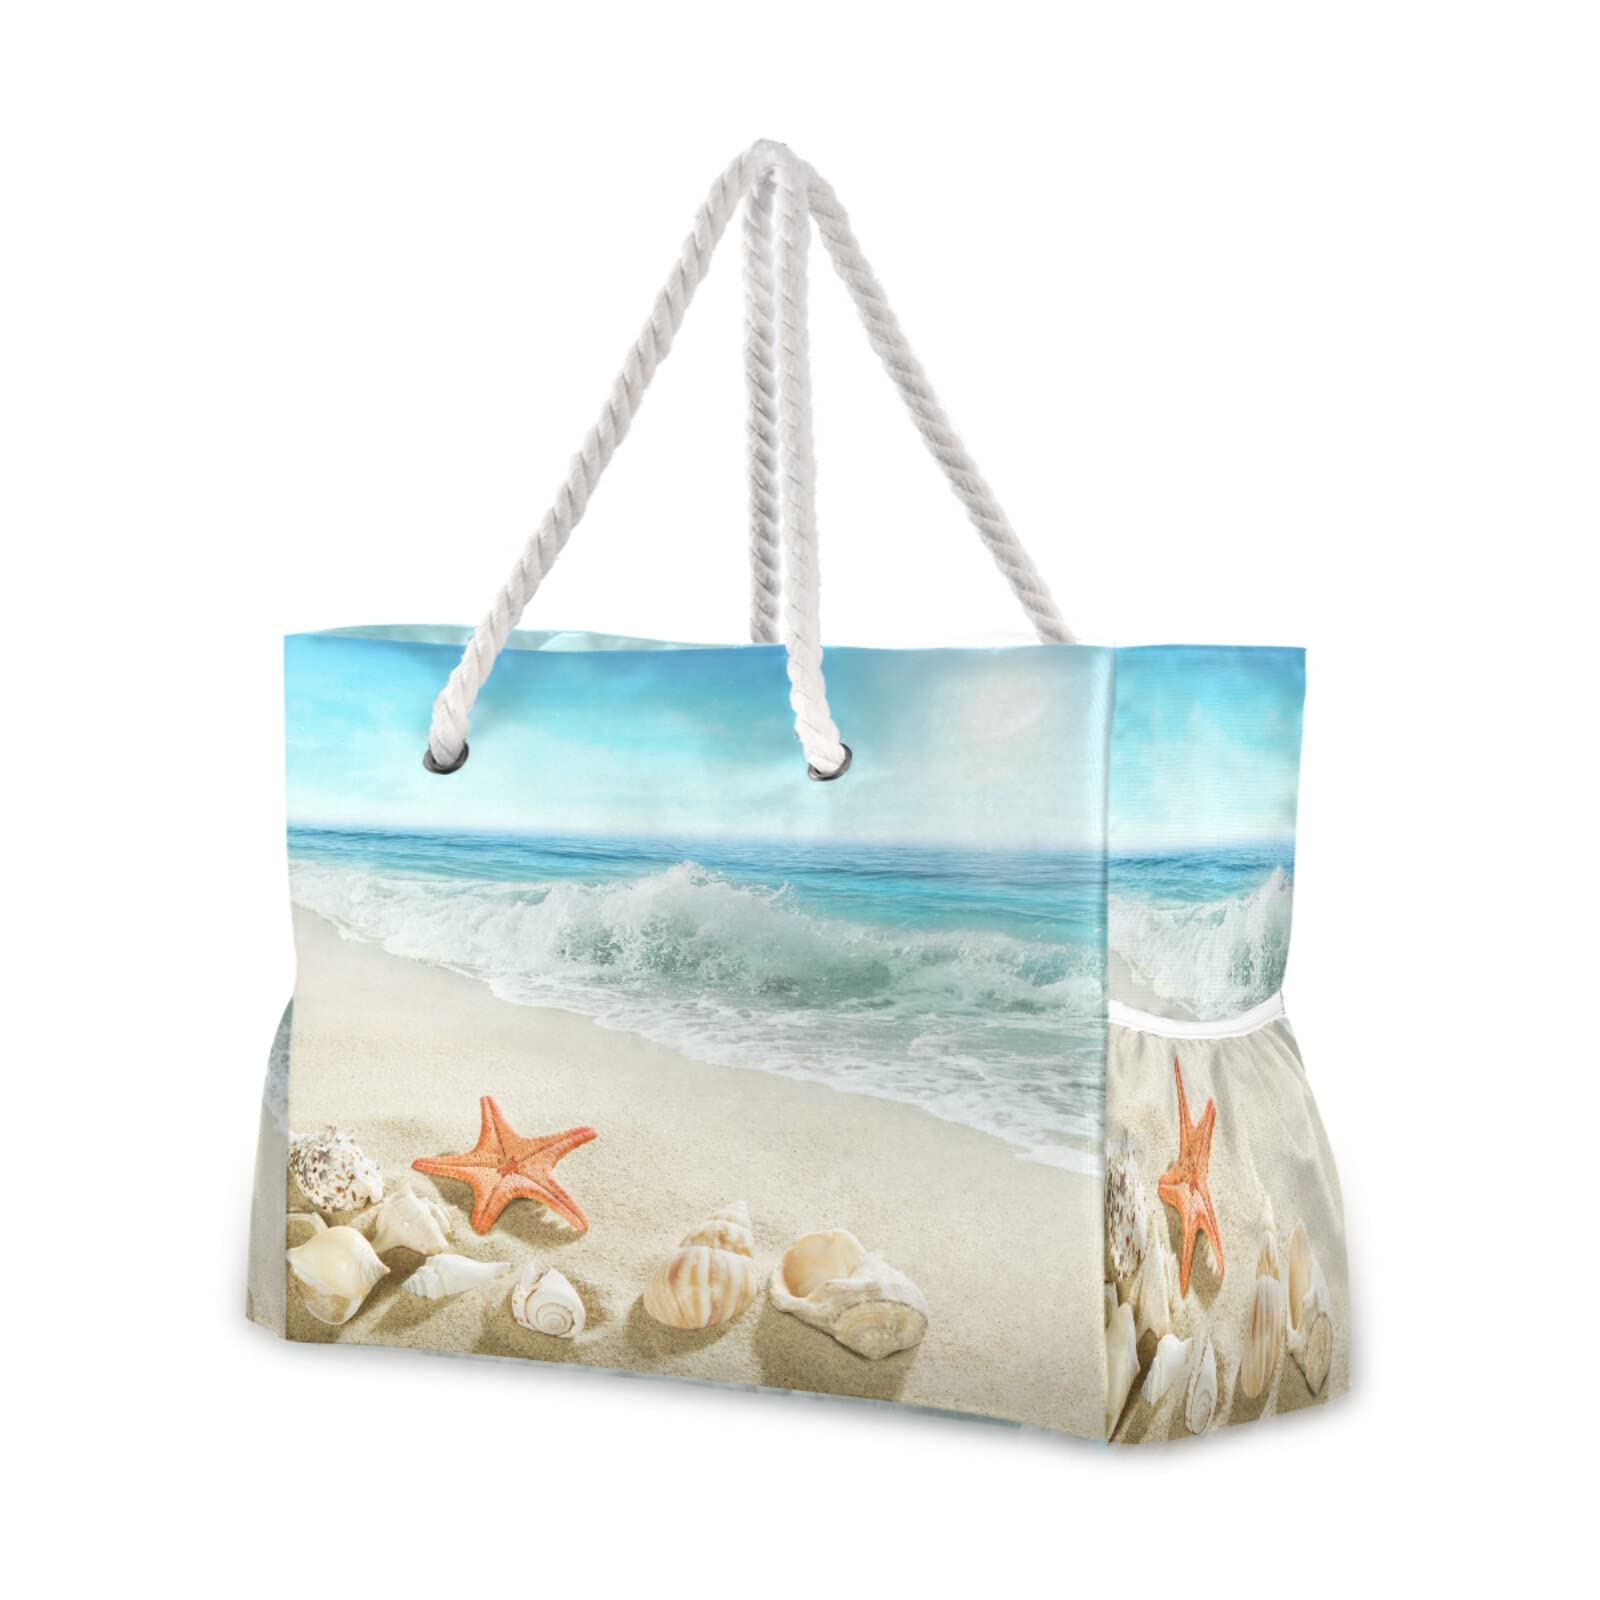 OREZI Large Zip Tote Beach Bag ,Oversize Beautiful Starfish Seashell Tote Bag Shoulder Bag Weekender for gym Beach Travel Pool Y